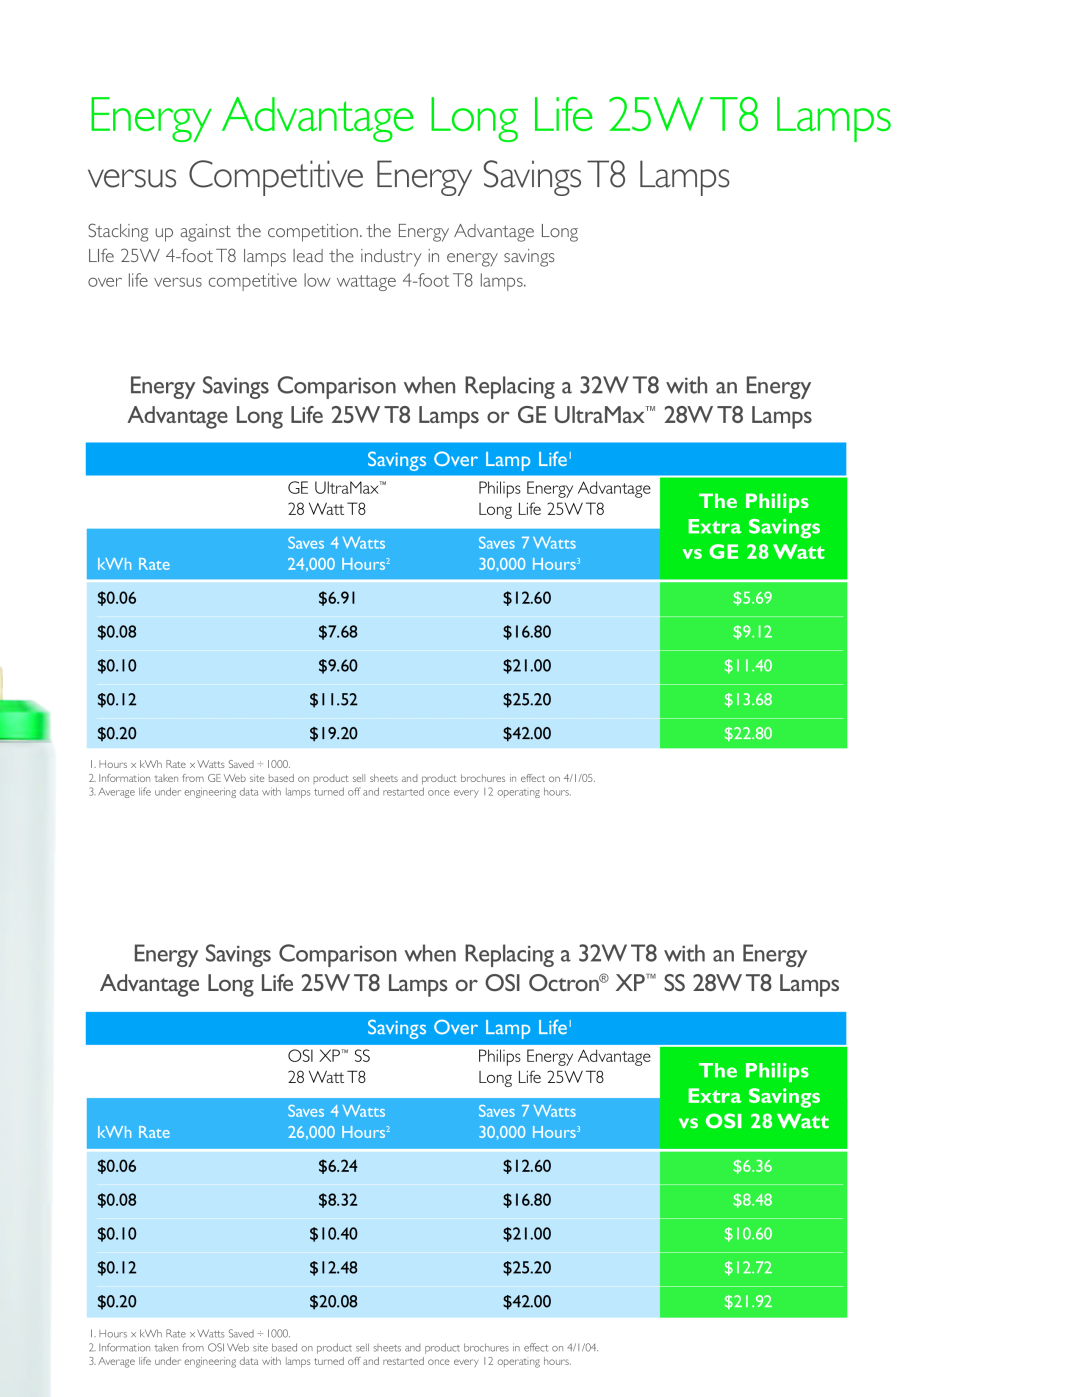 Philips versus Competitive Energy Savings T8 Lamps, Energy Advantage Long Life 25W T8 Lamps, The Philips, vs GE 28 Watt 